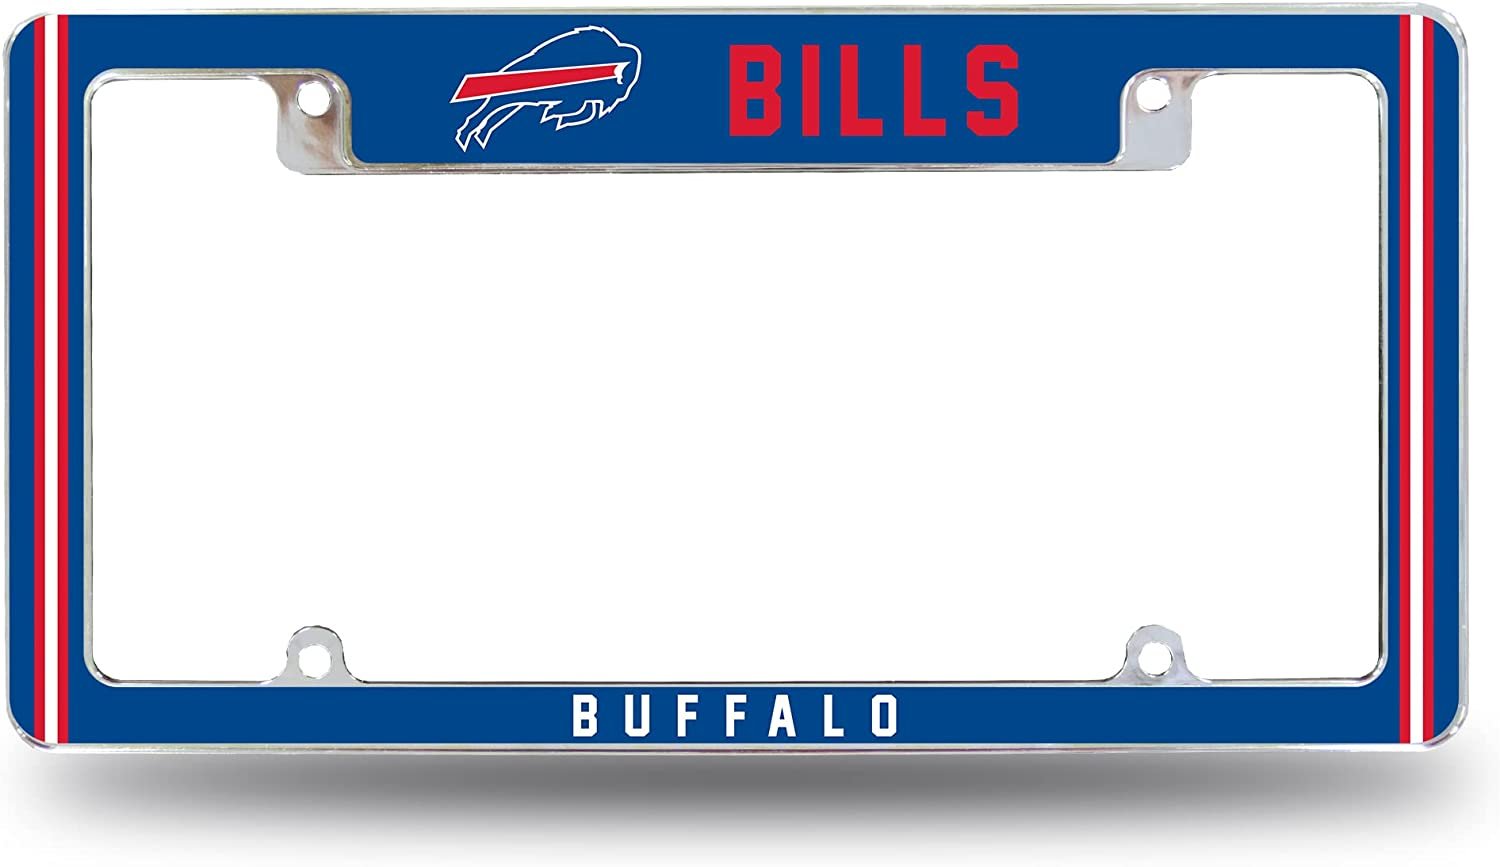 Buffalo Bills Metal License Plate Frame Chrome Tag Cover Alternate Design 6x12 Inch